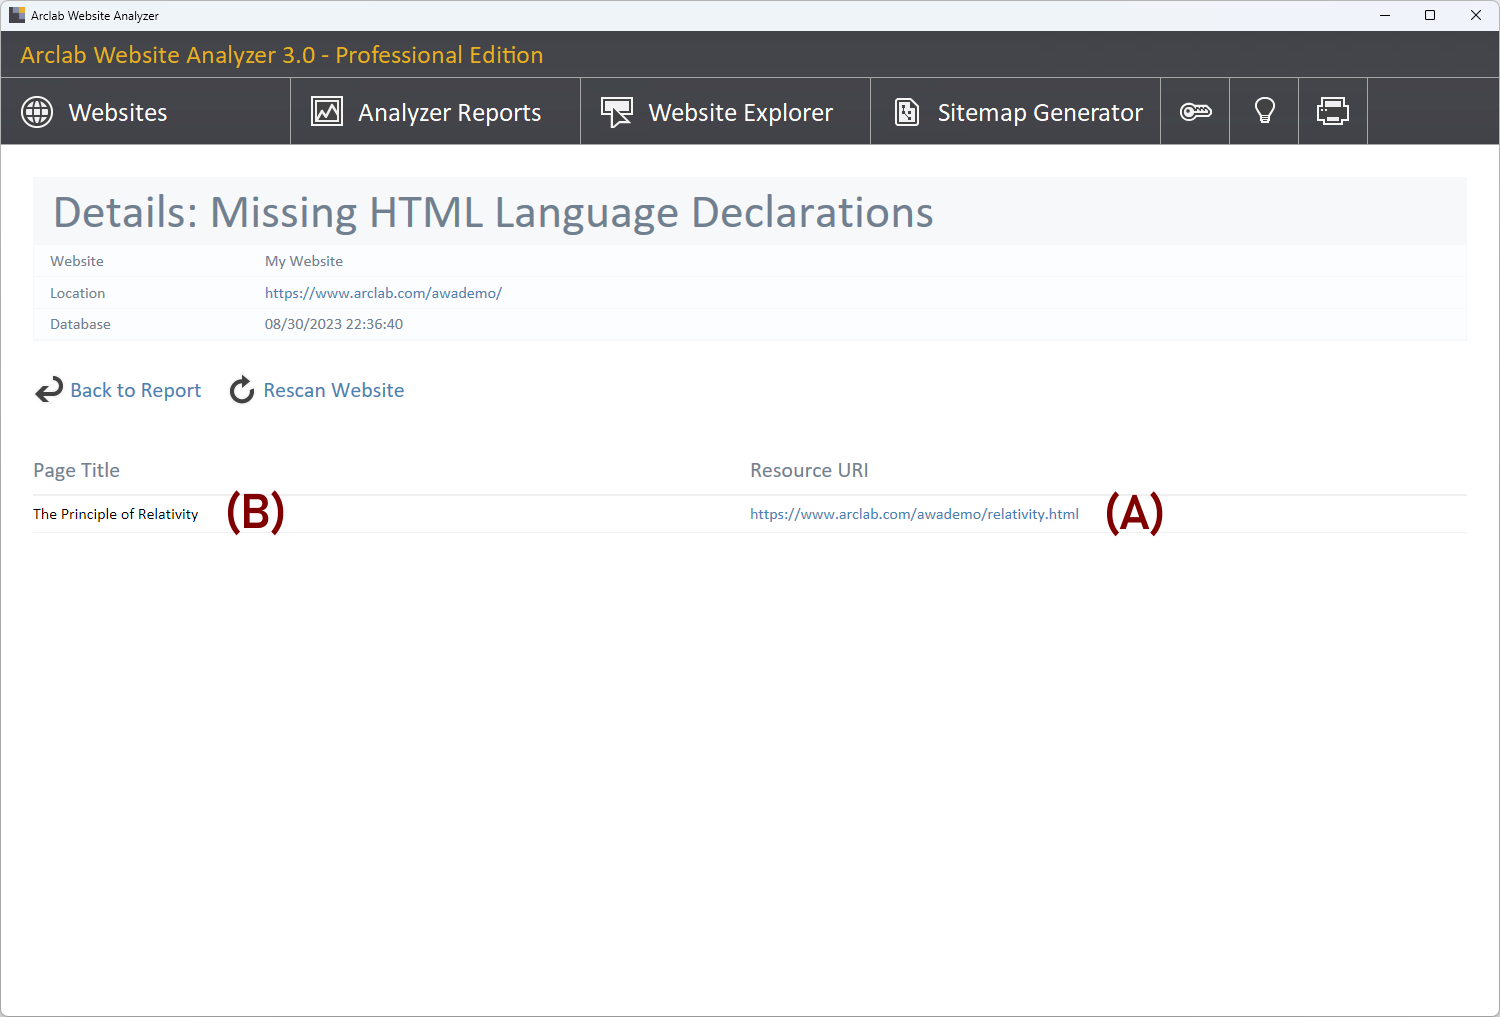 Details: Missing HTML Language Declarations